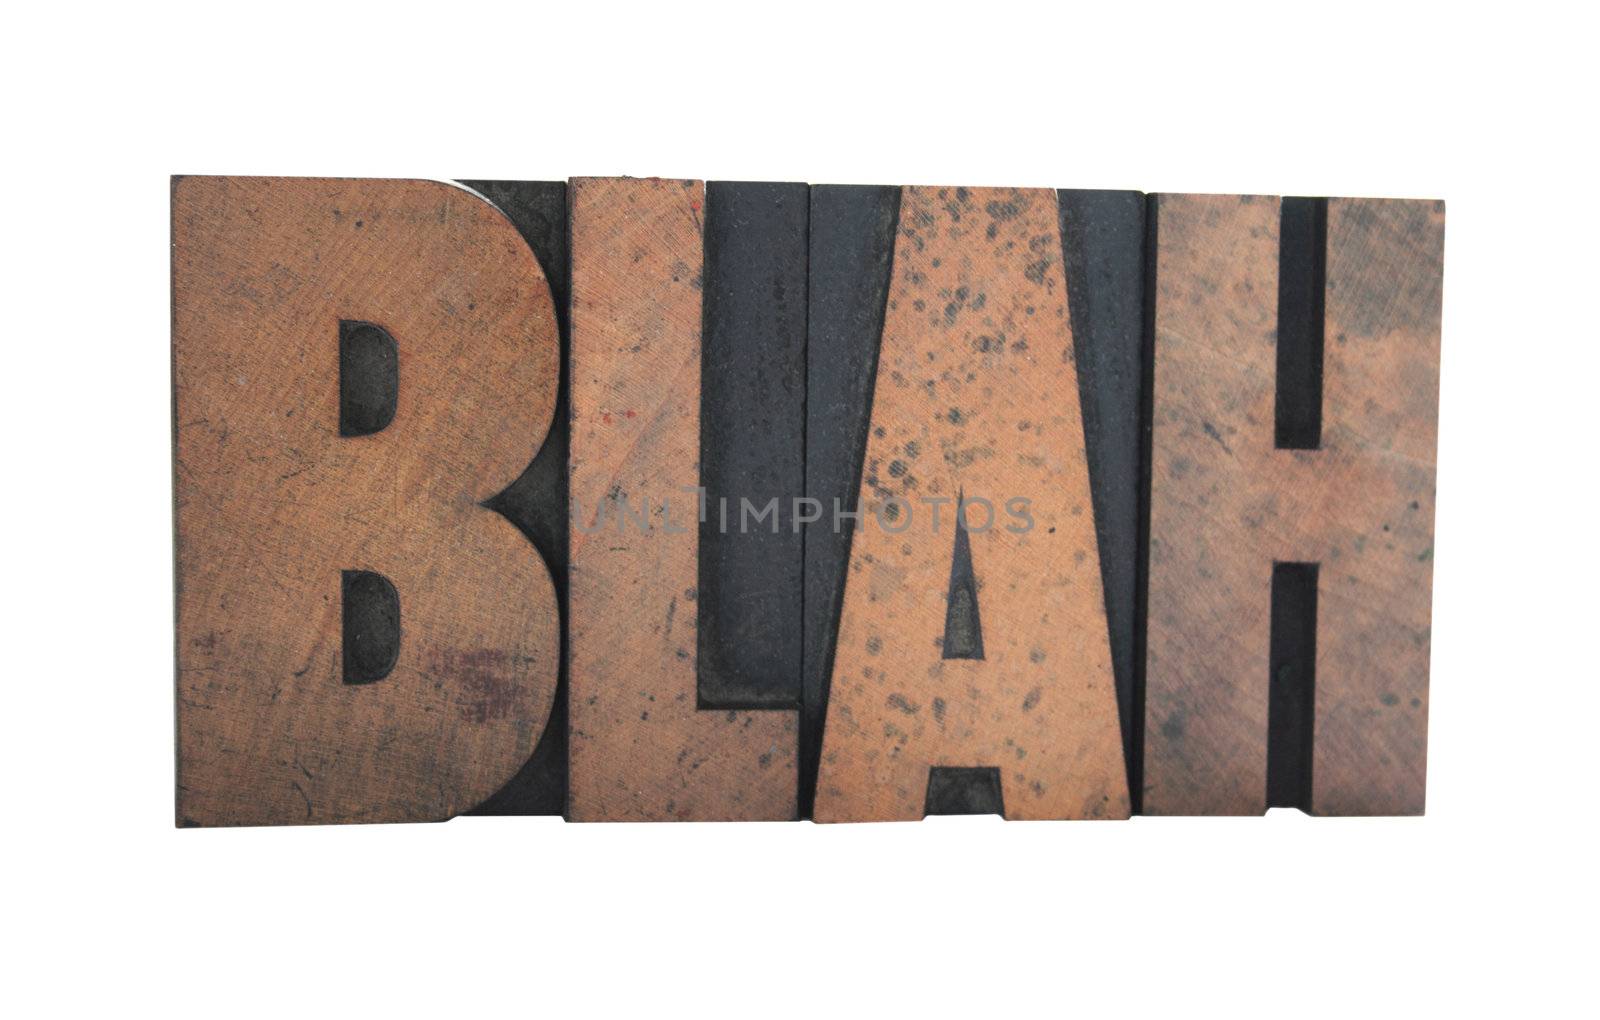 blah in letterpress wood type by nebari